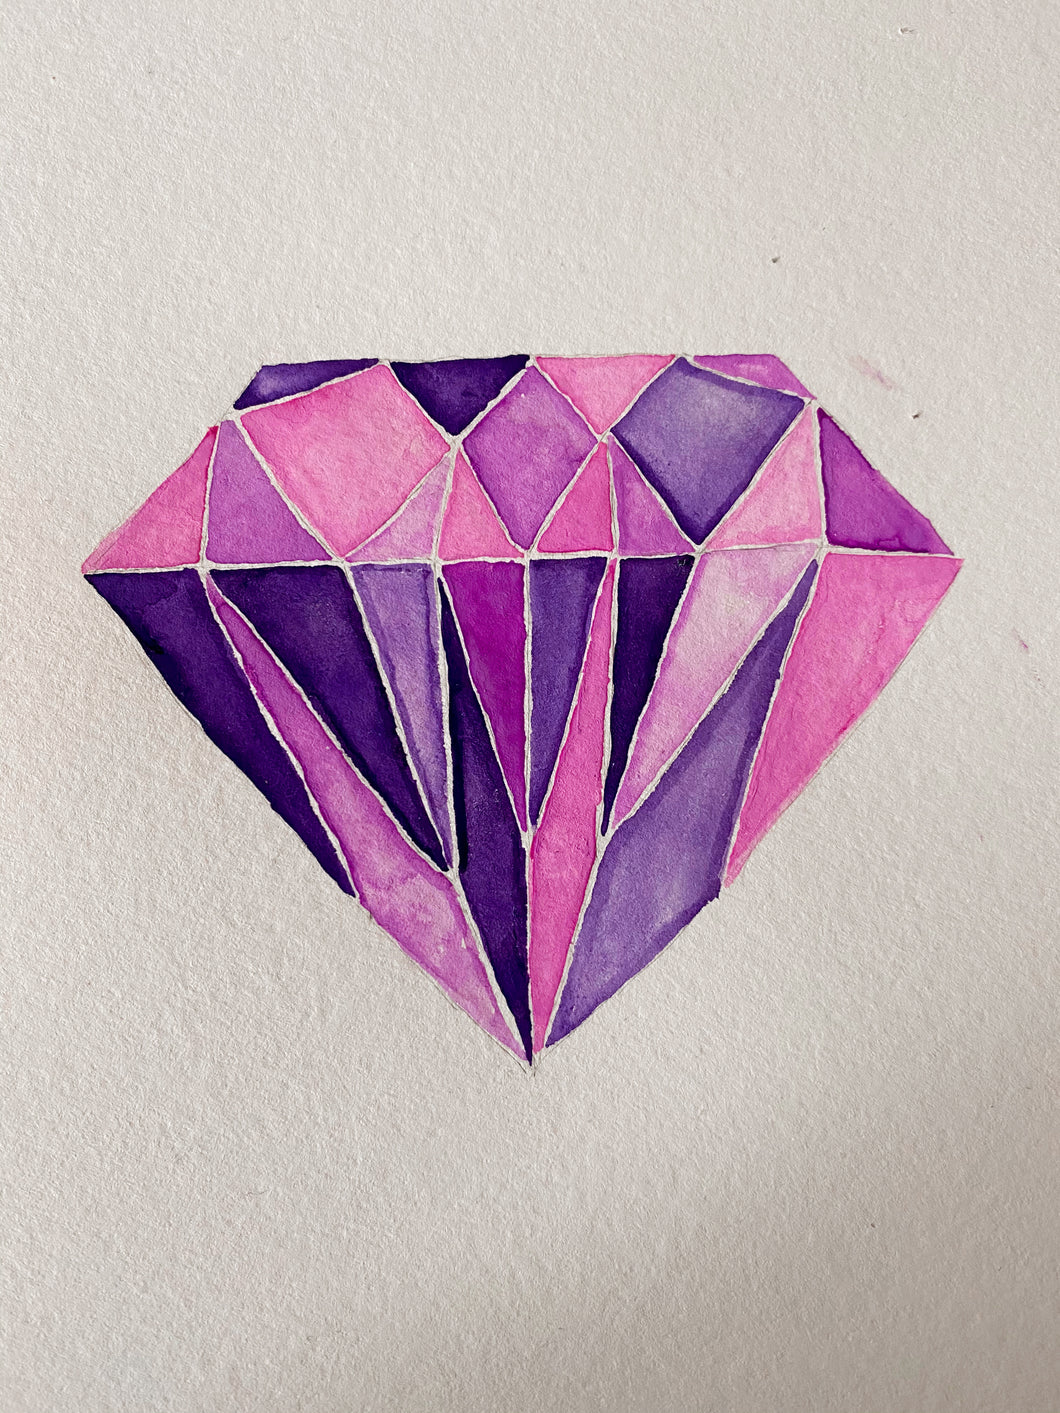 8 x 10 inch Purple Diamond Watercolor by GS